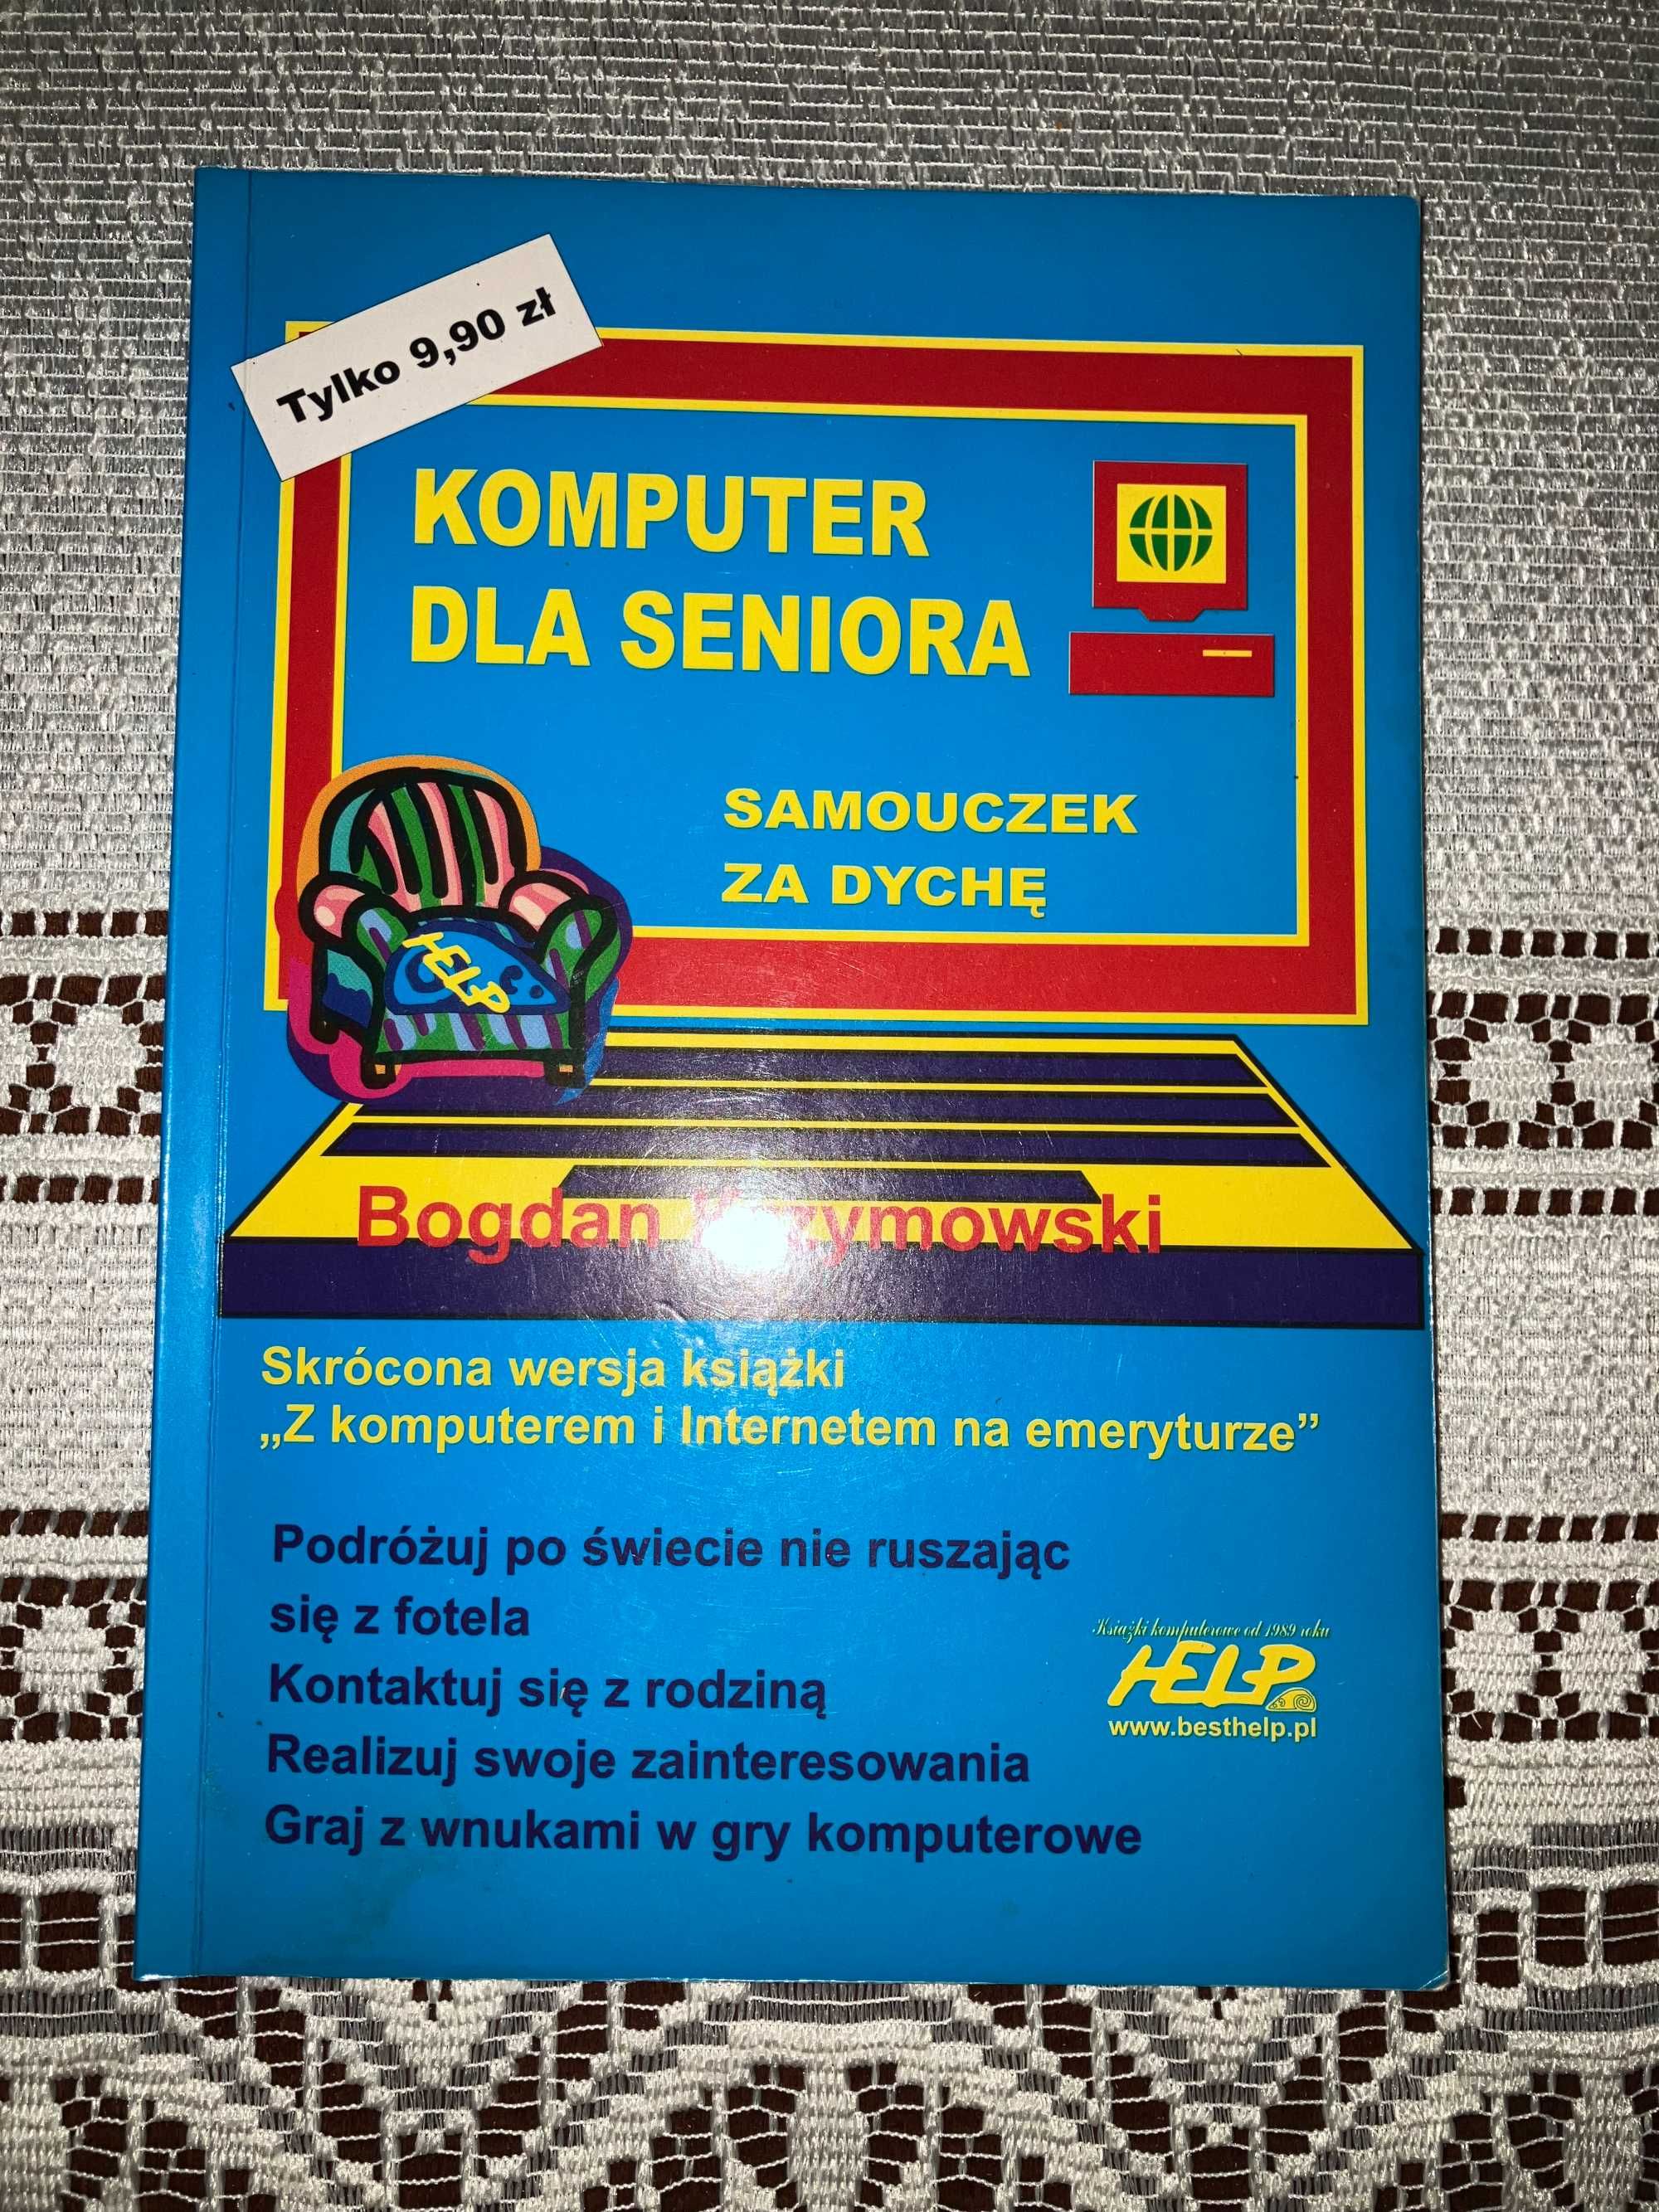 Książka "Komputer dla seniora"-samouczek